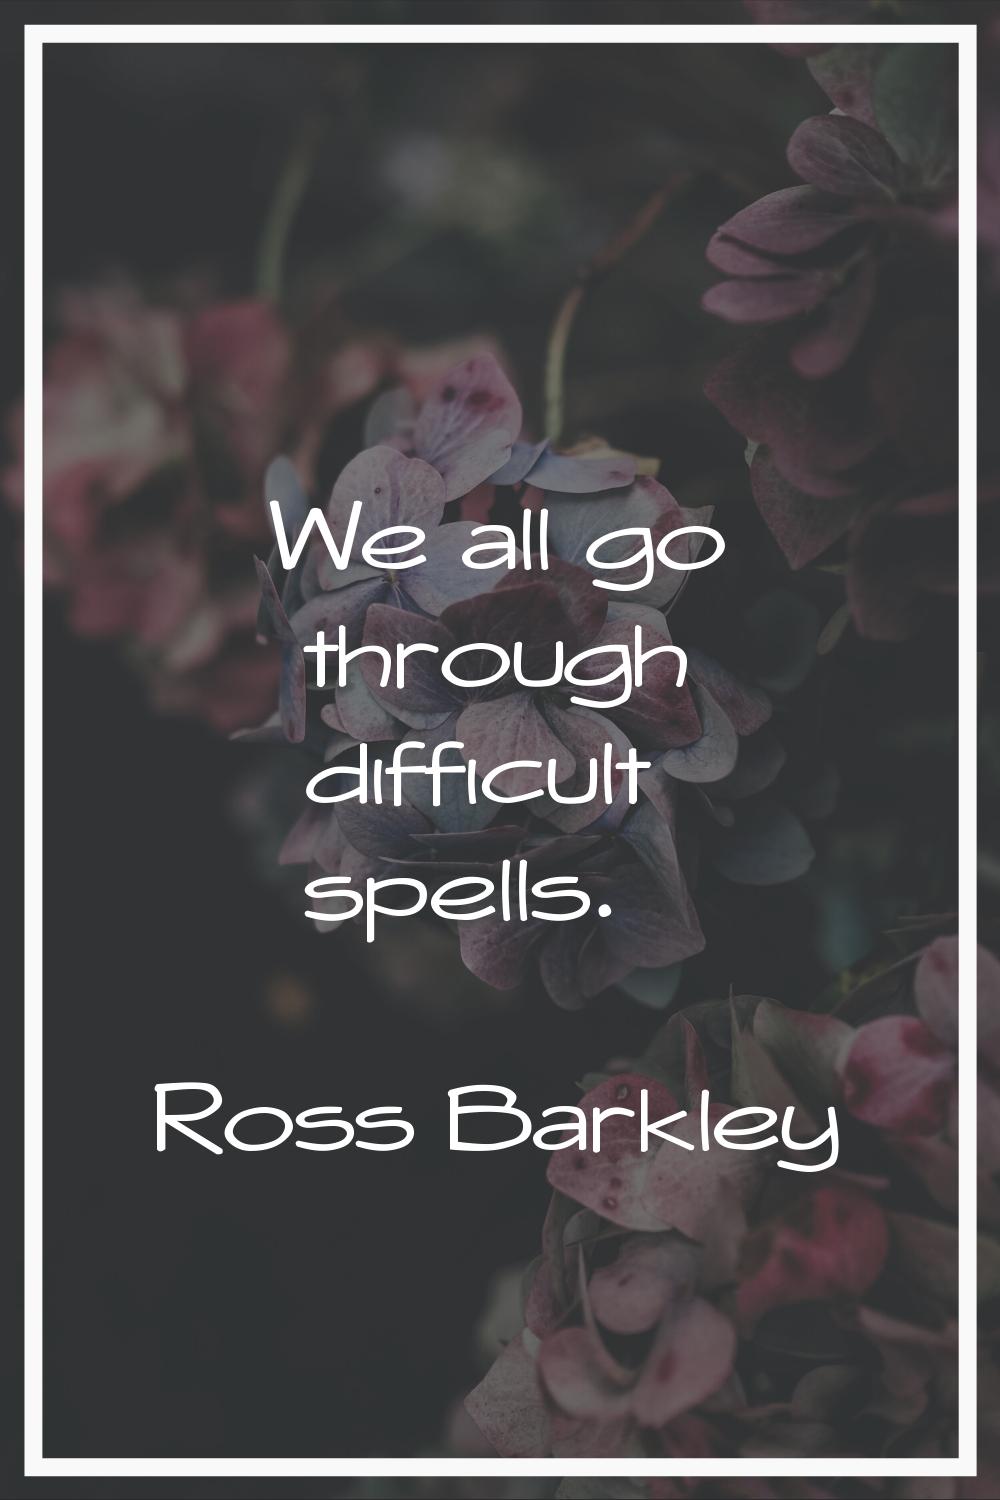 We all go through difficult spells.